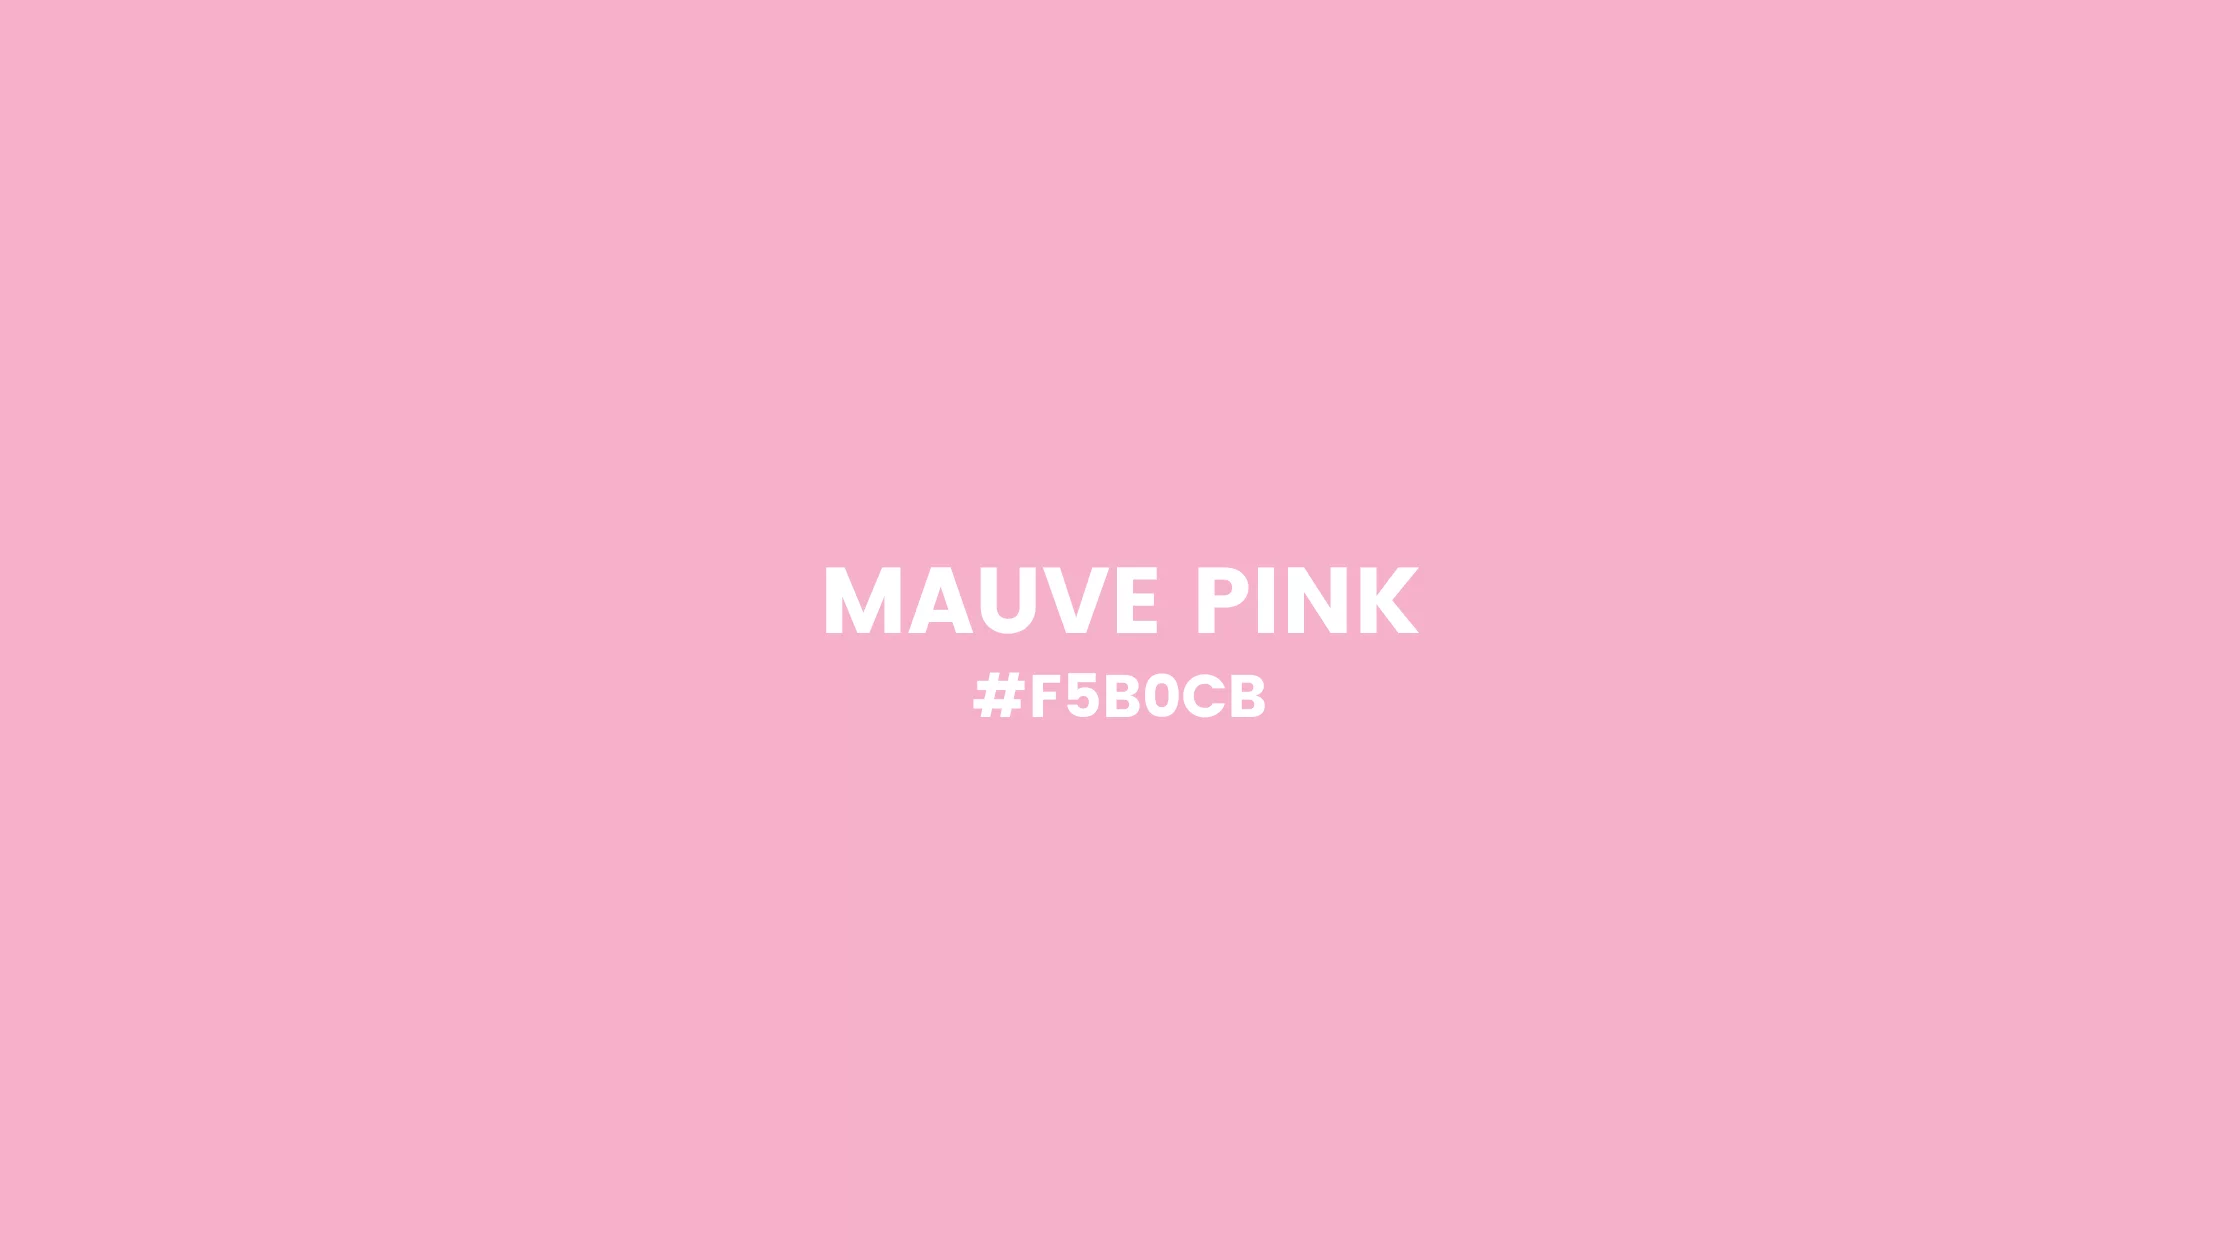 Mauve Pink